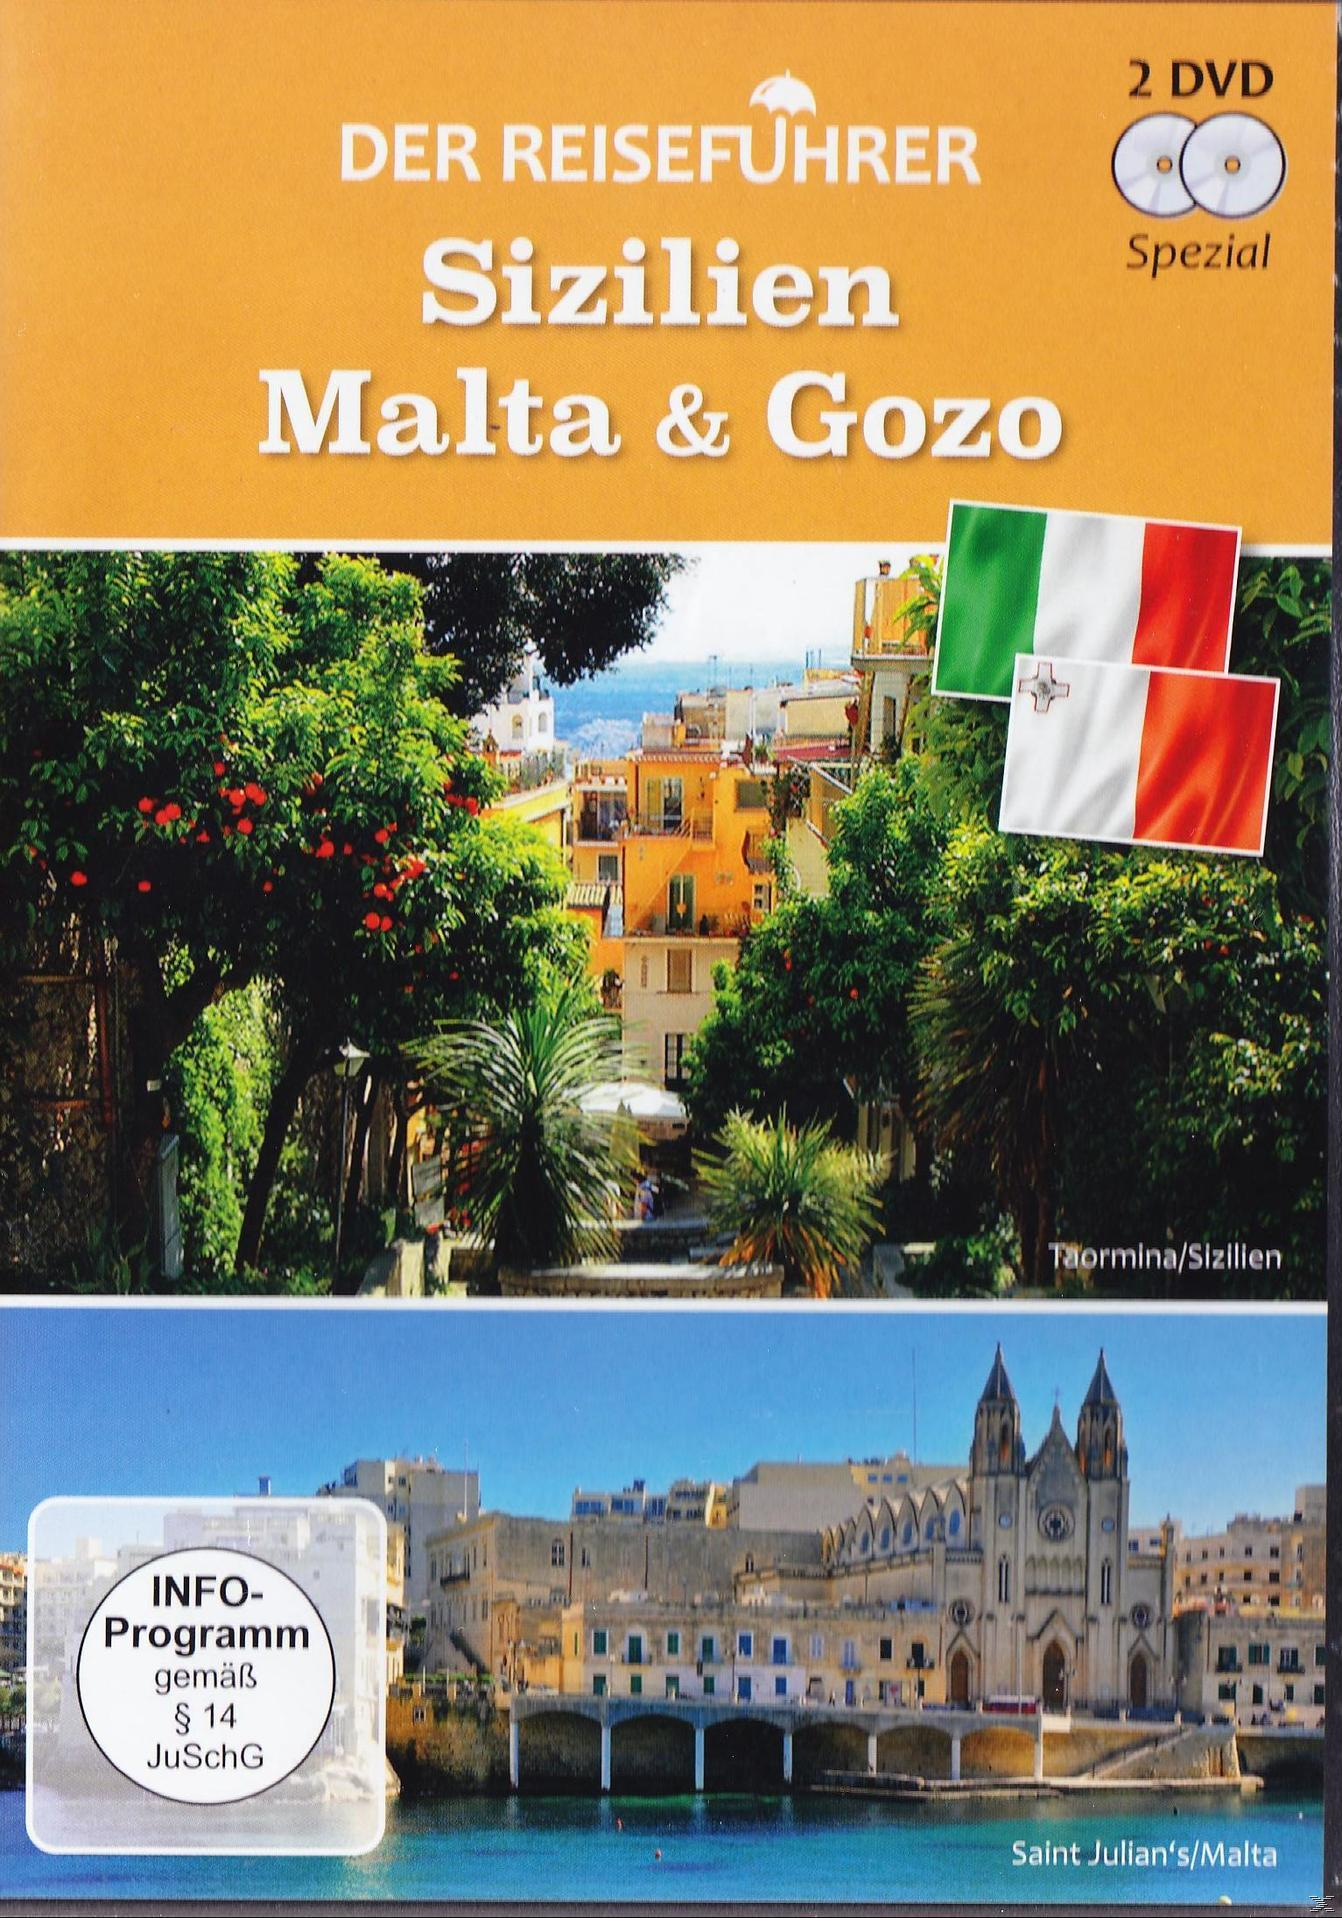 Der Reiseführer - Sizilien, Malta DVD Gozo 